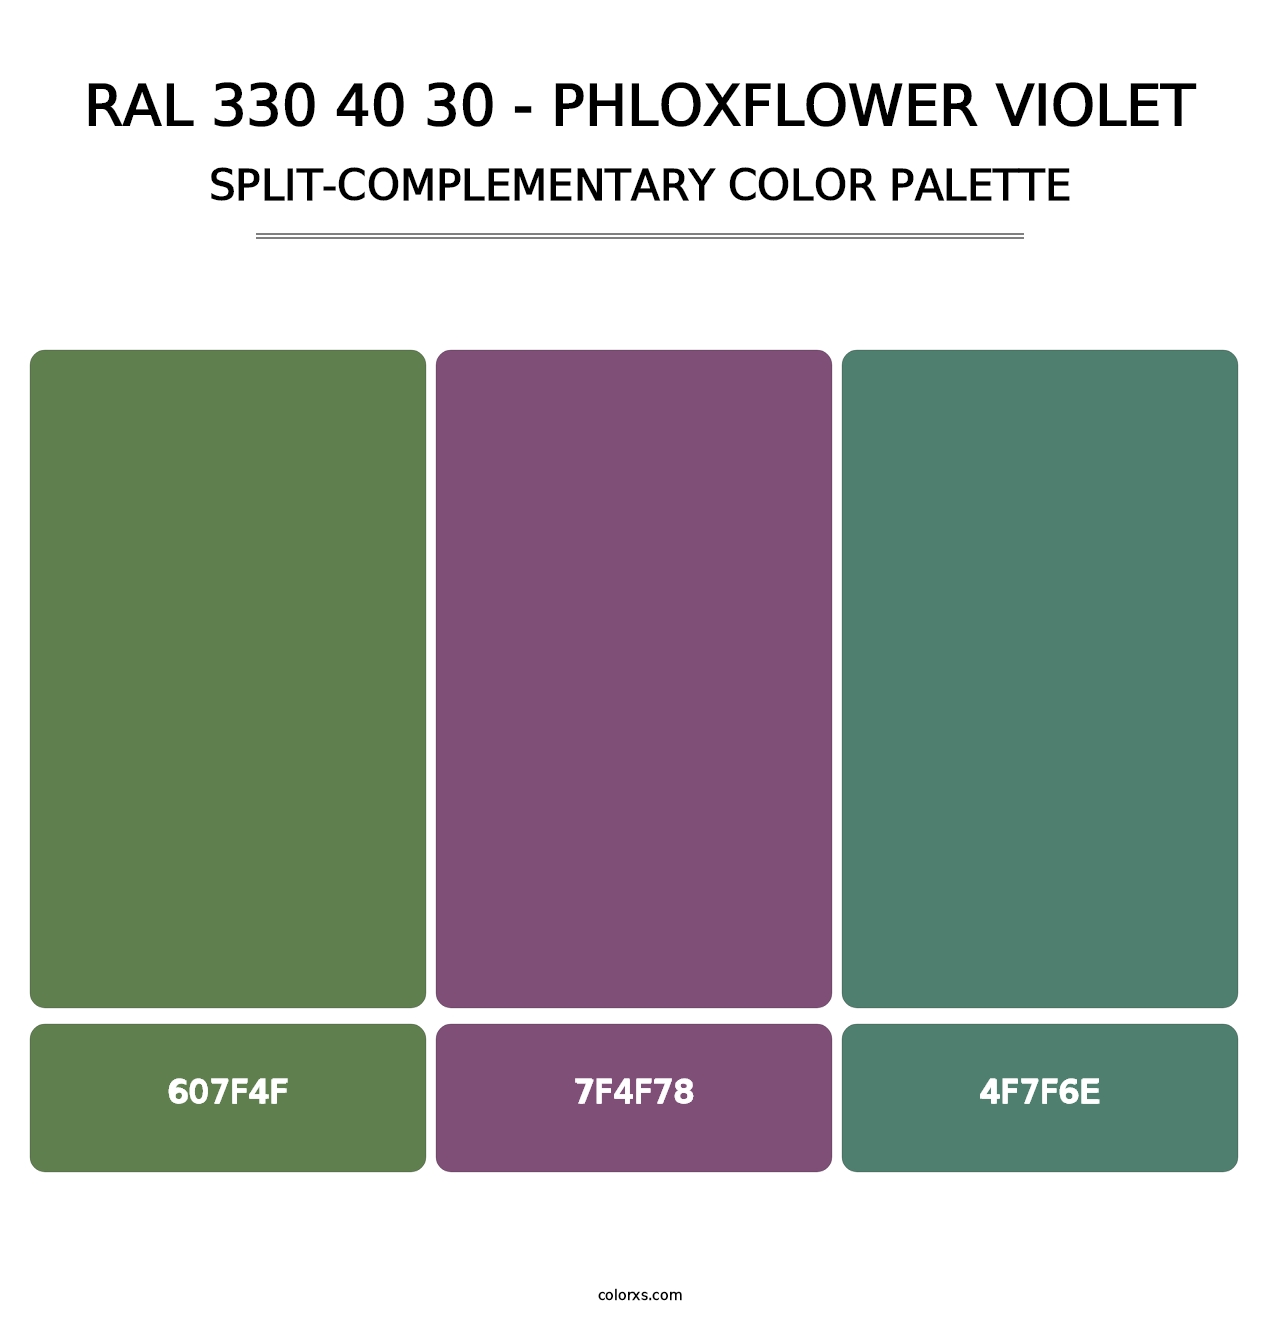 RAL 330 40 30 - Phloxflower Violet - Split-Complementary Color Palette